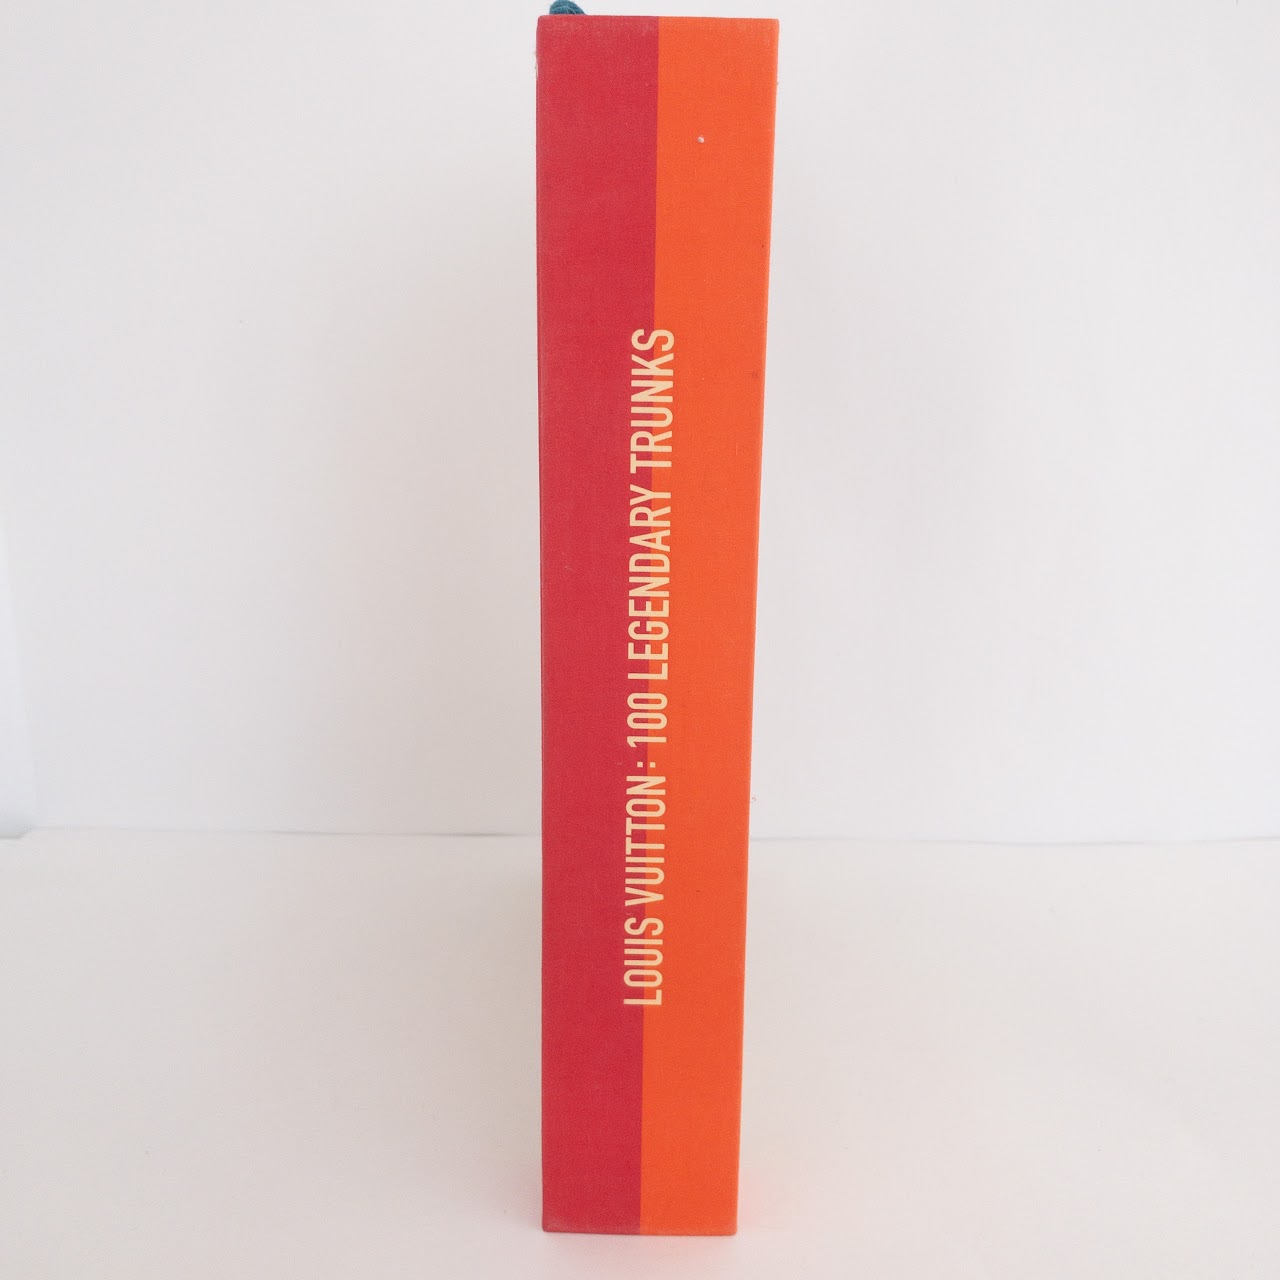 Abrams Louis Vuitton: 100 Legendary Trunks - Orange Books